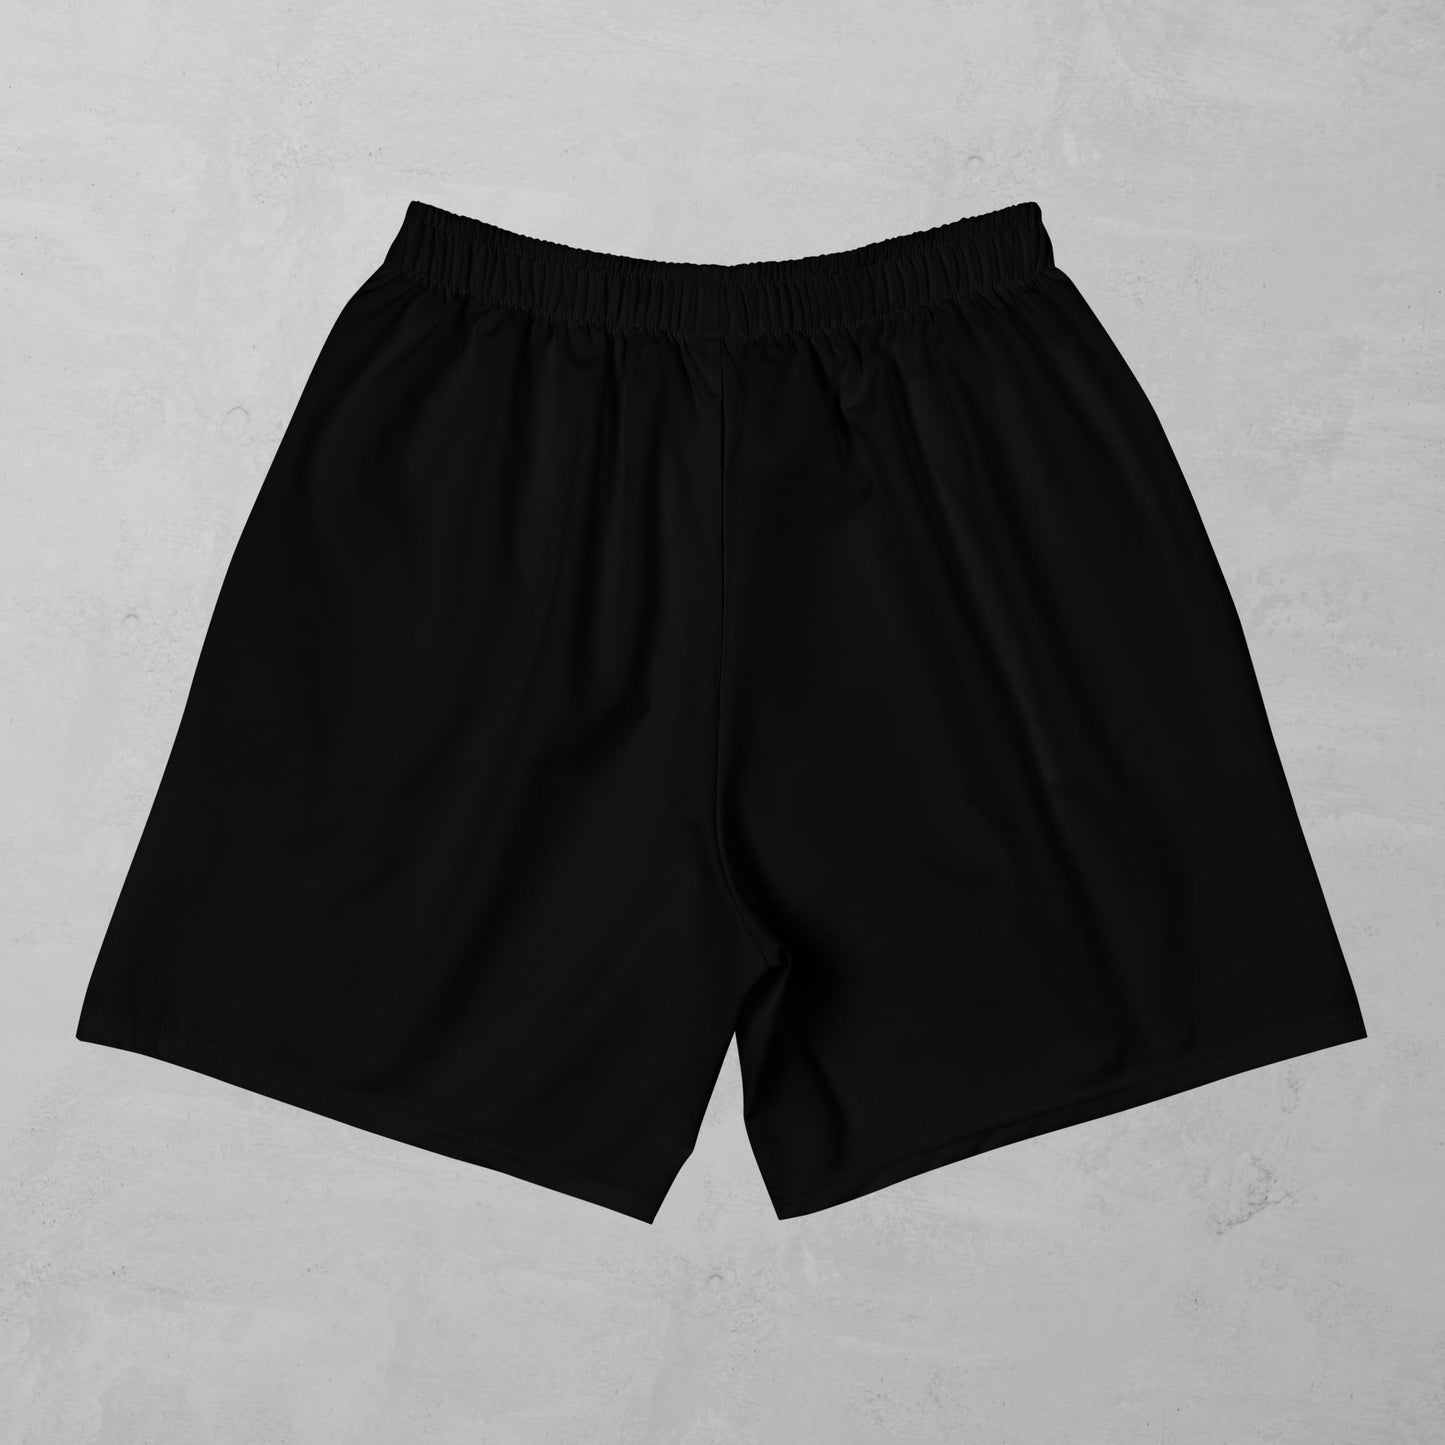 J.A Men's Athletic Shorts